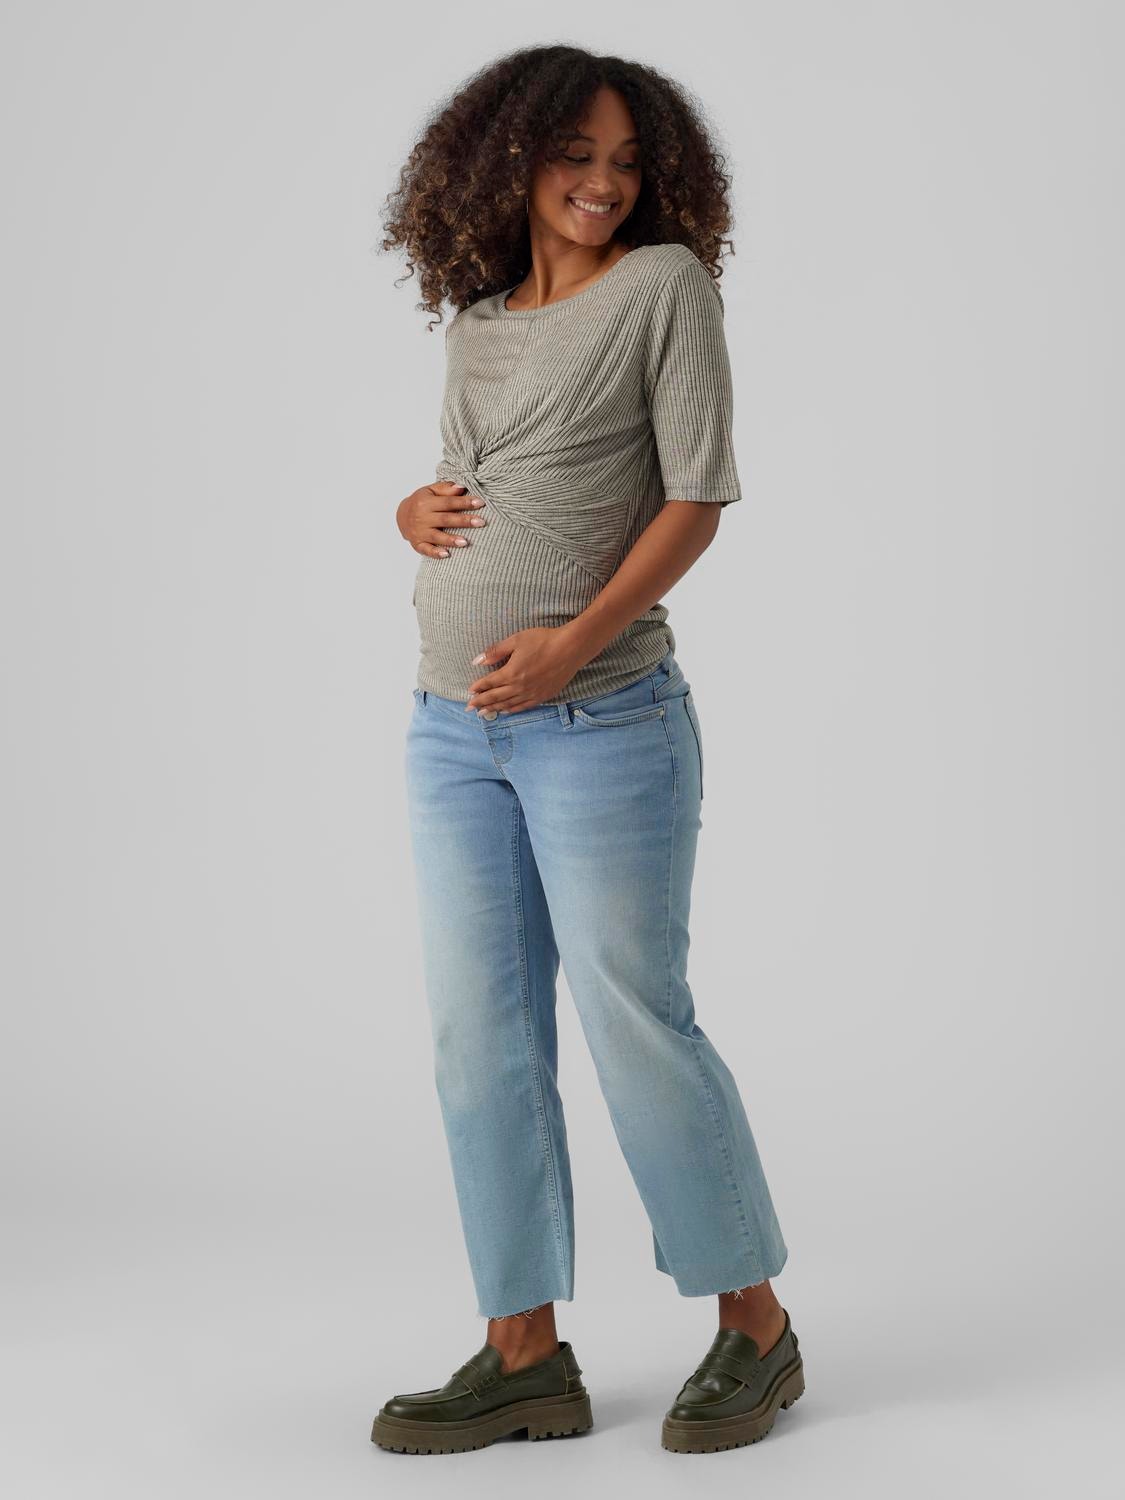 Light Wash Blue J Brand Maternity Skinny Jeans (Gently Used - Size